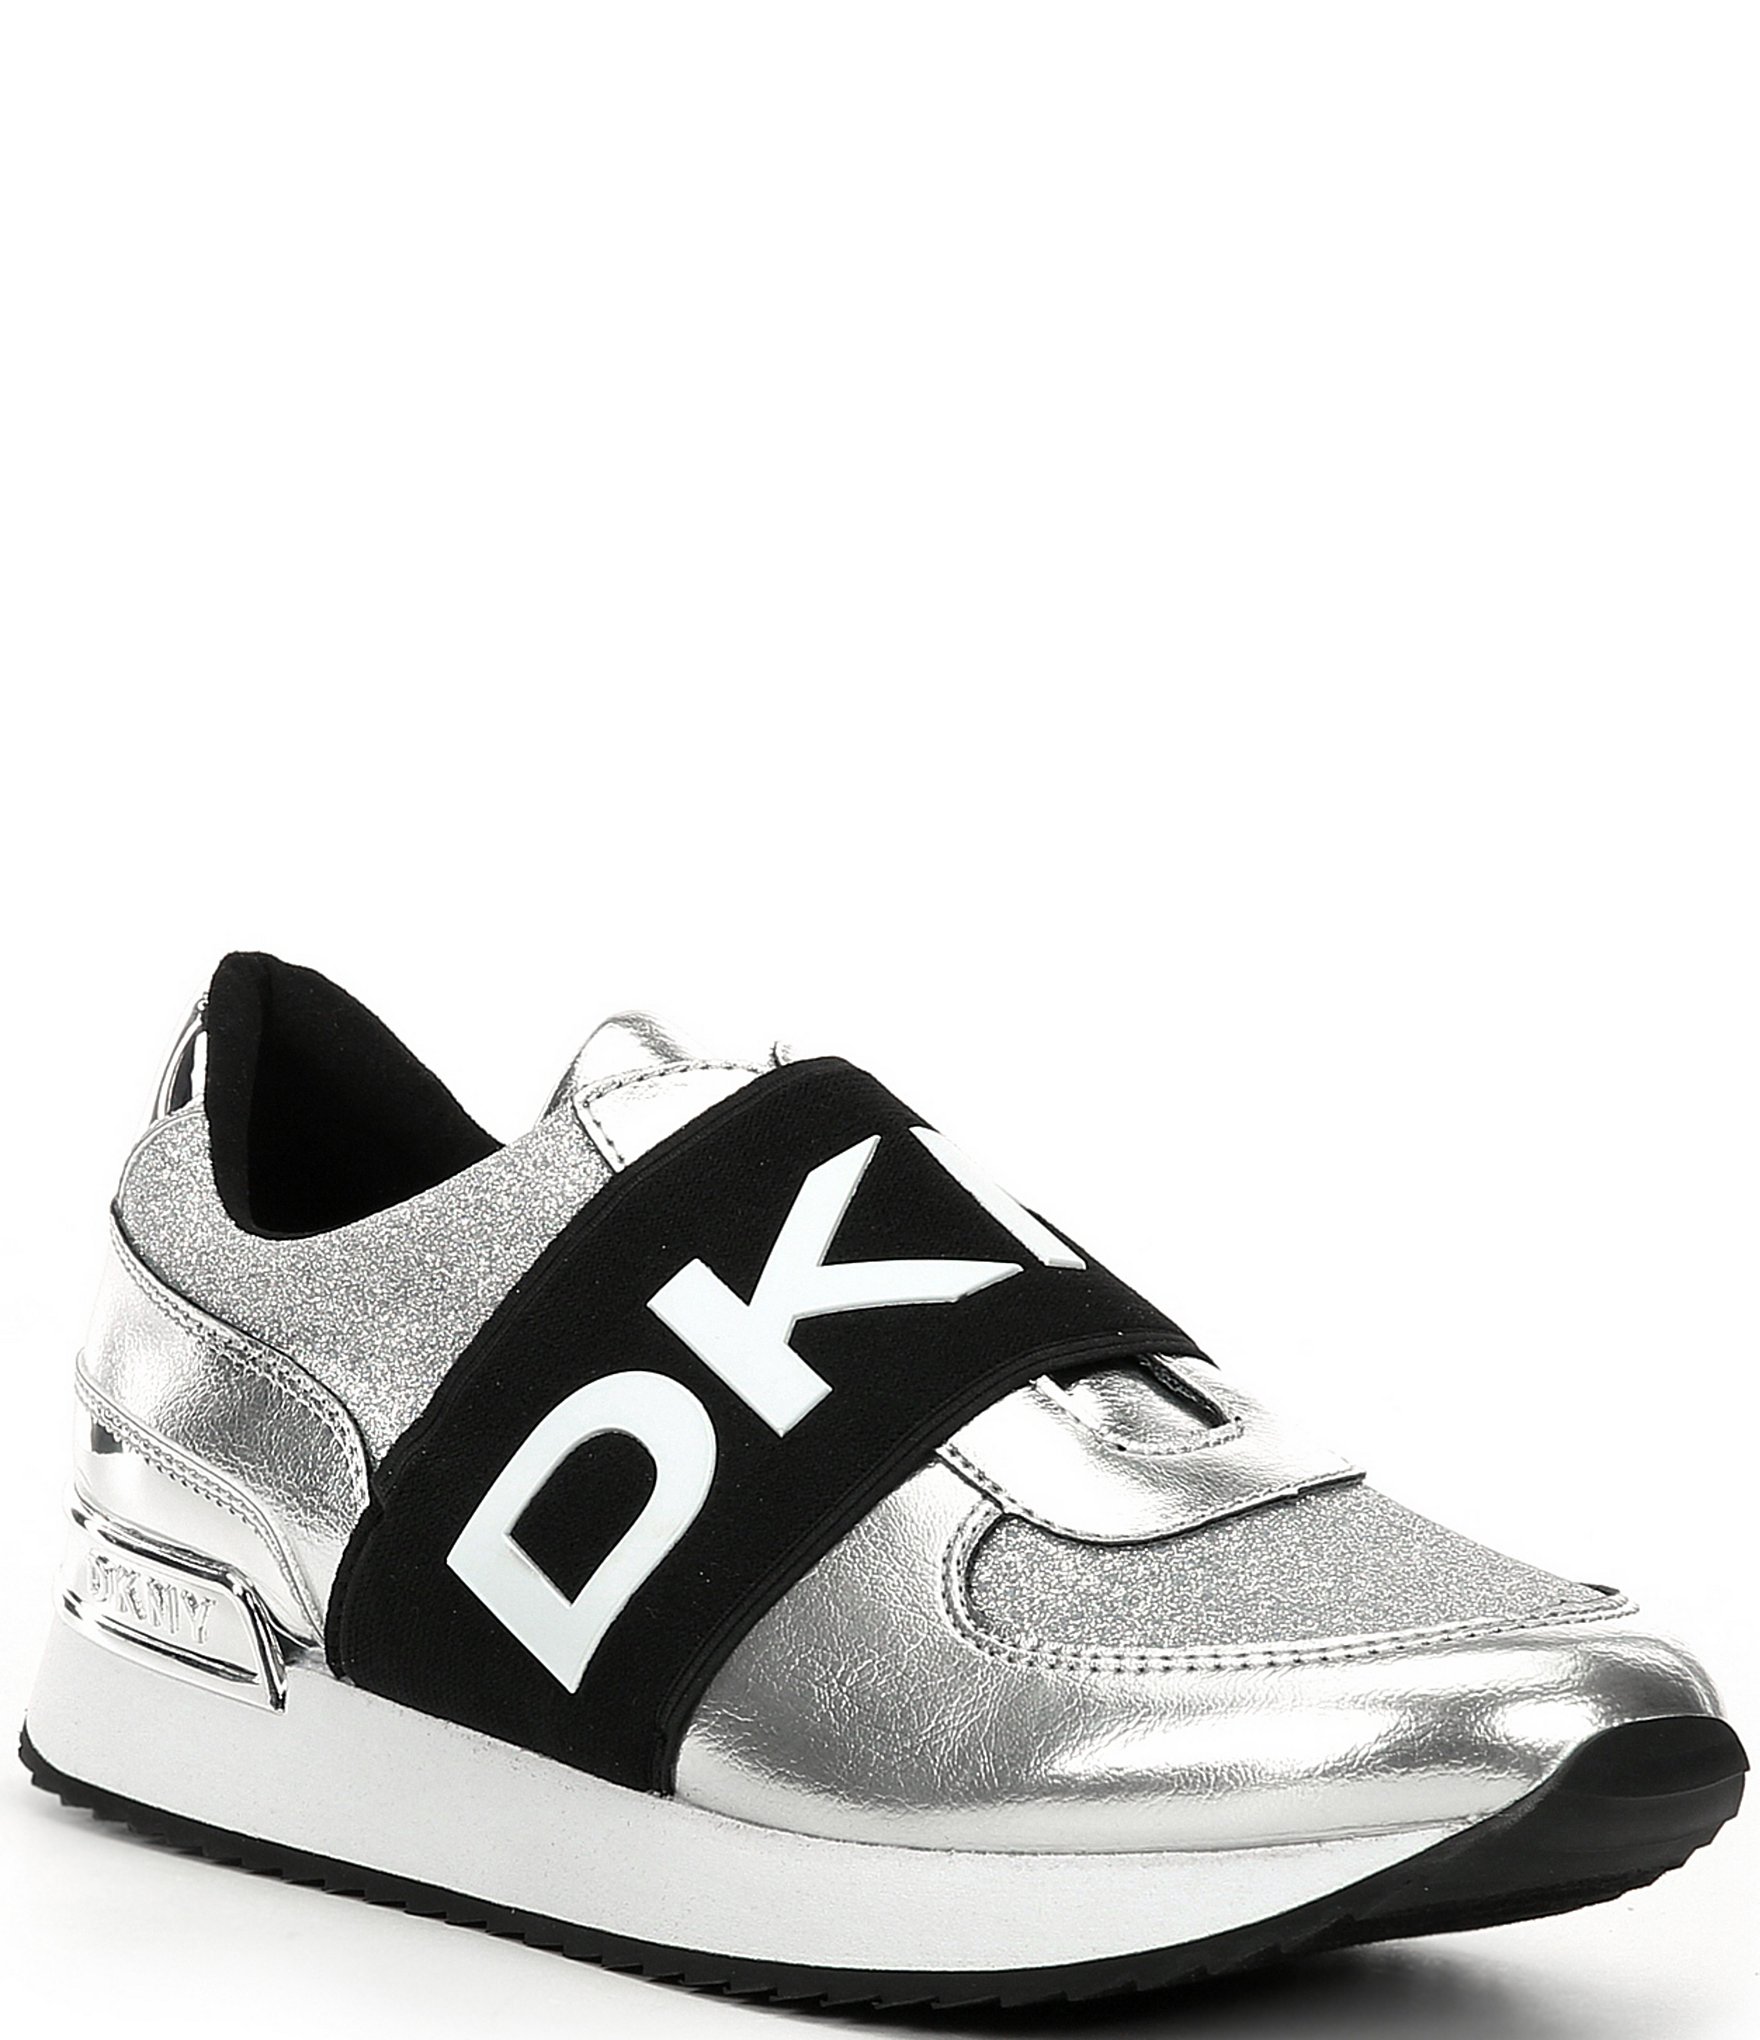 Buy > dkny shoes black > in stock